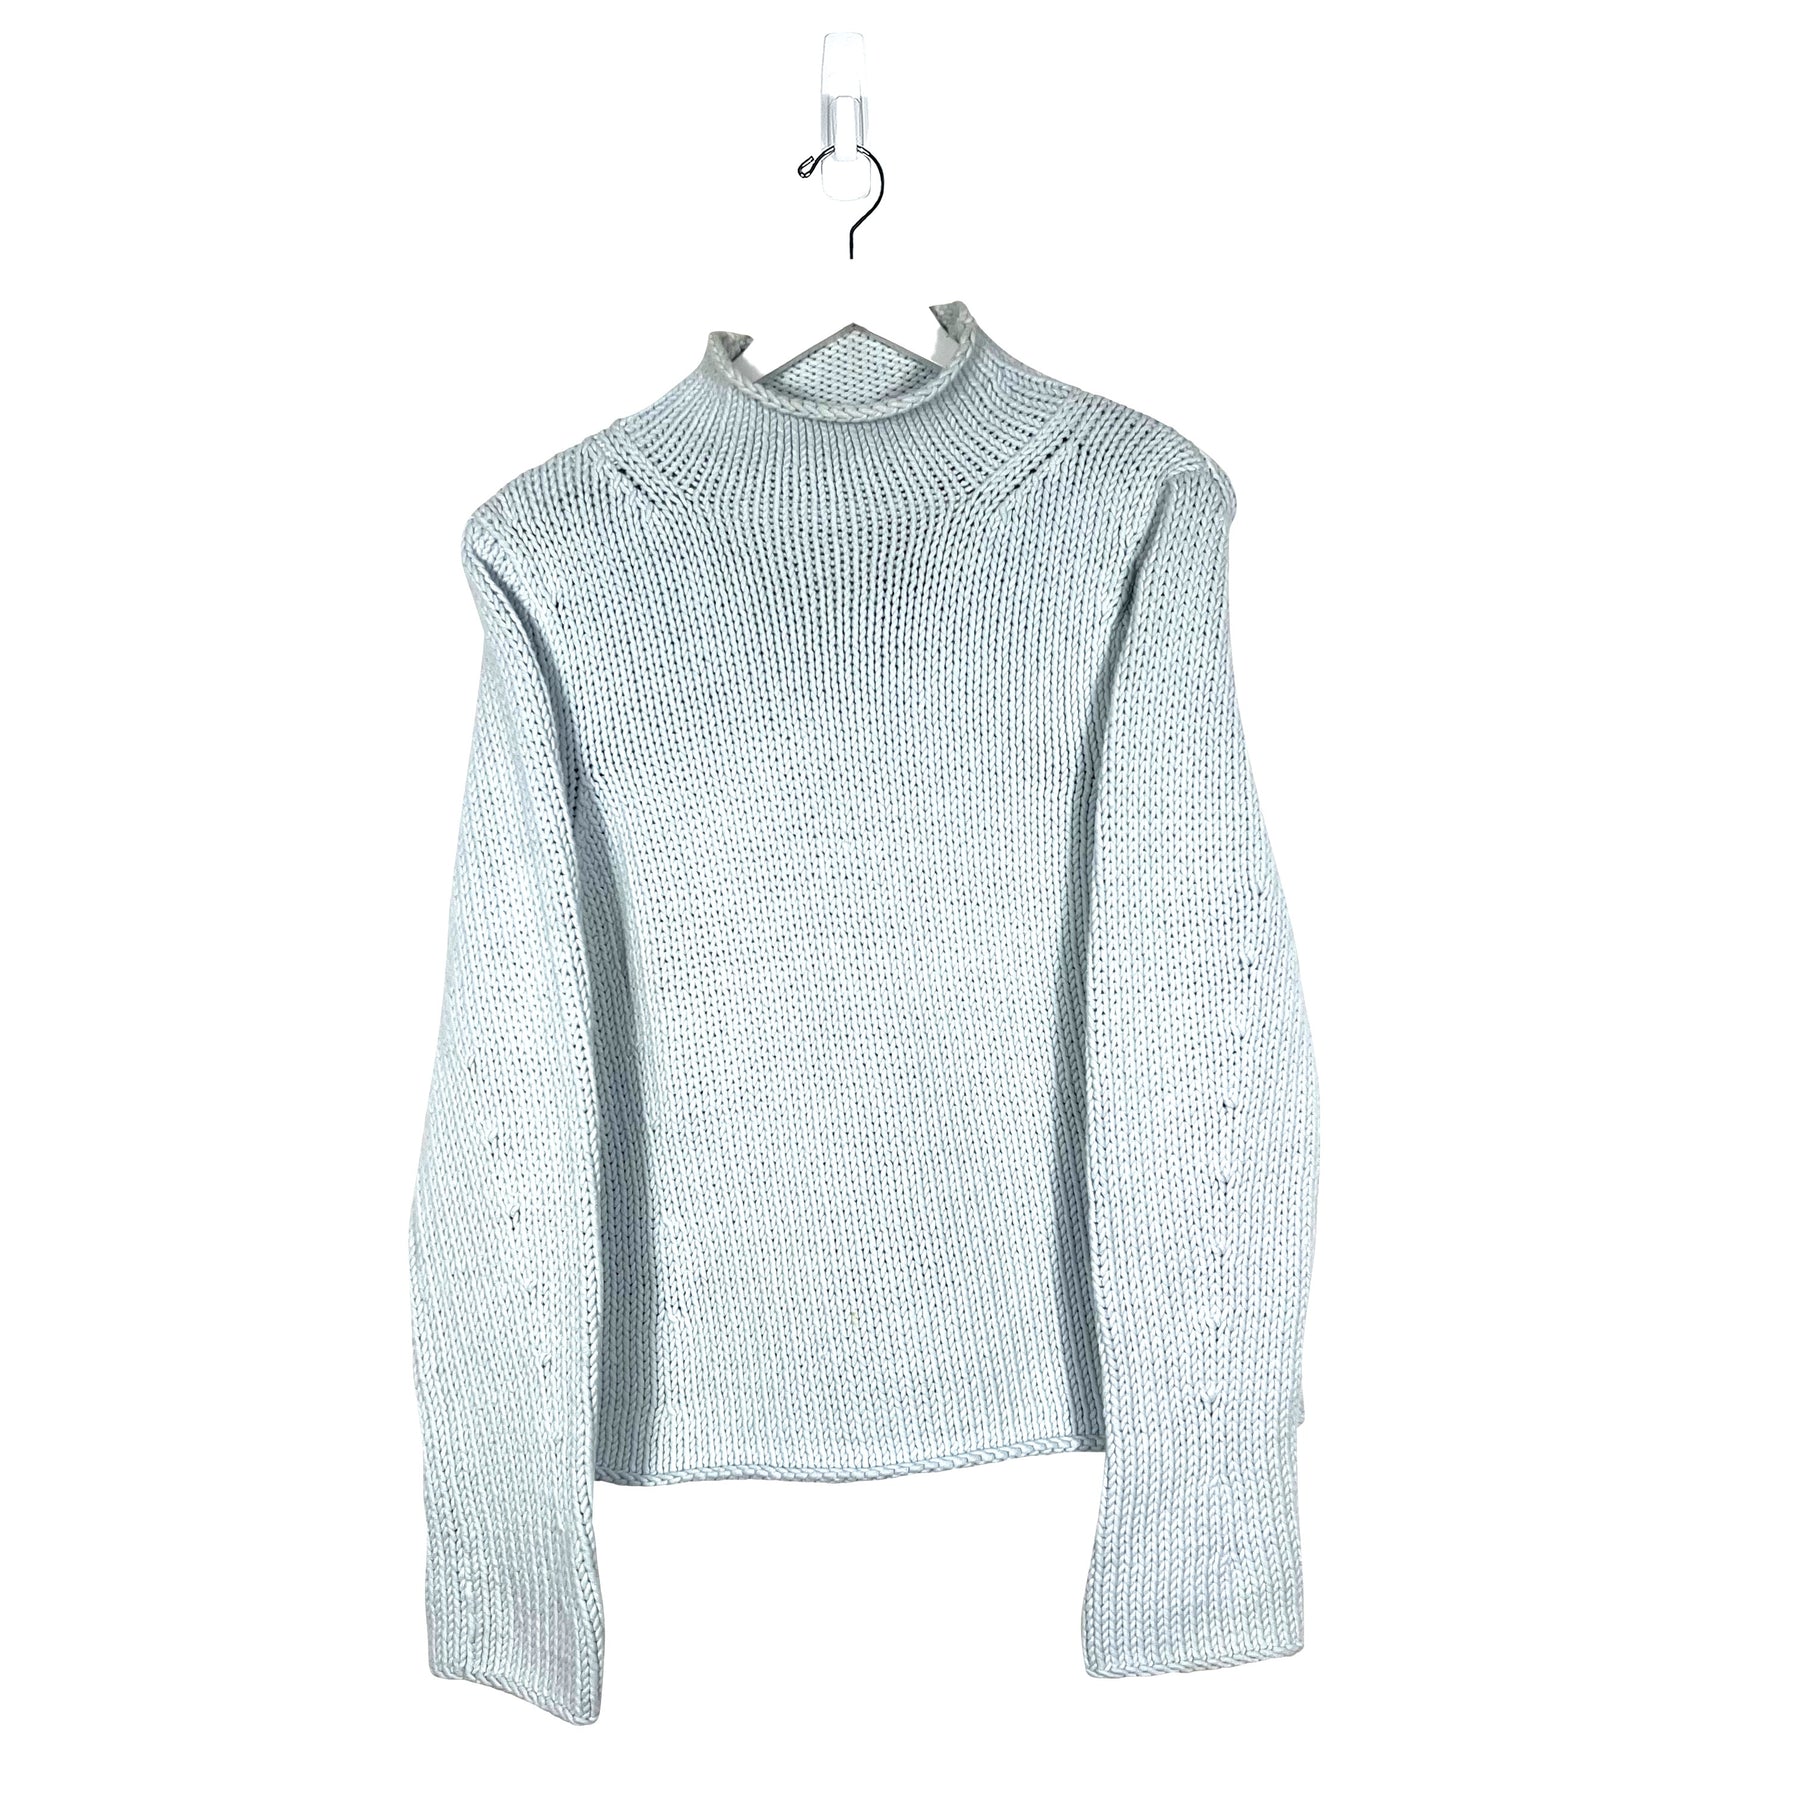 Tommy Hilfiger Mockneck Sweater - Women's Medium